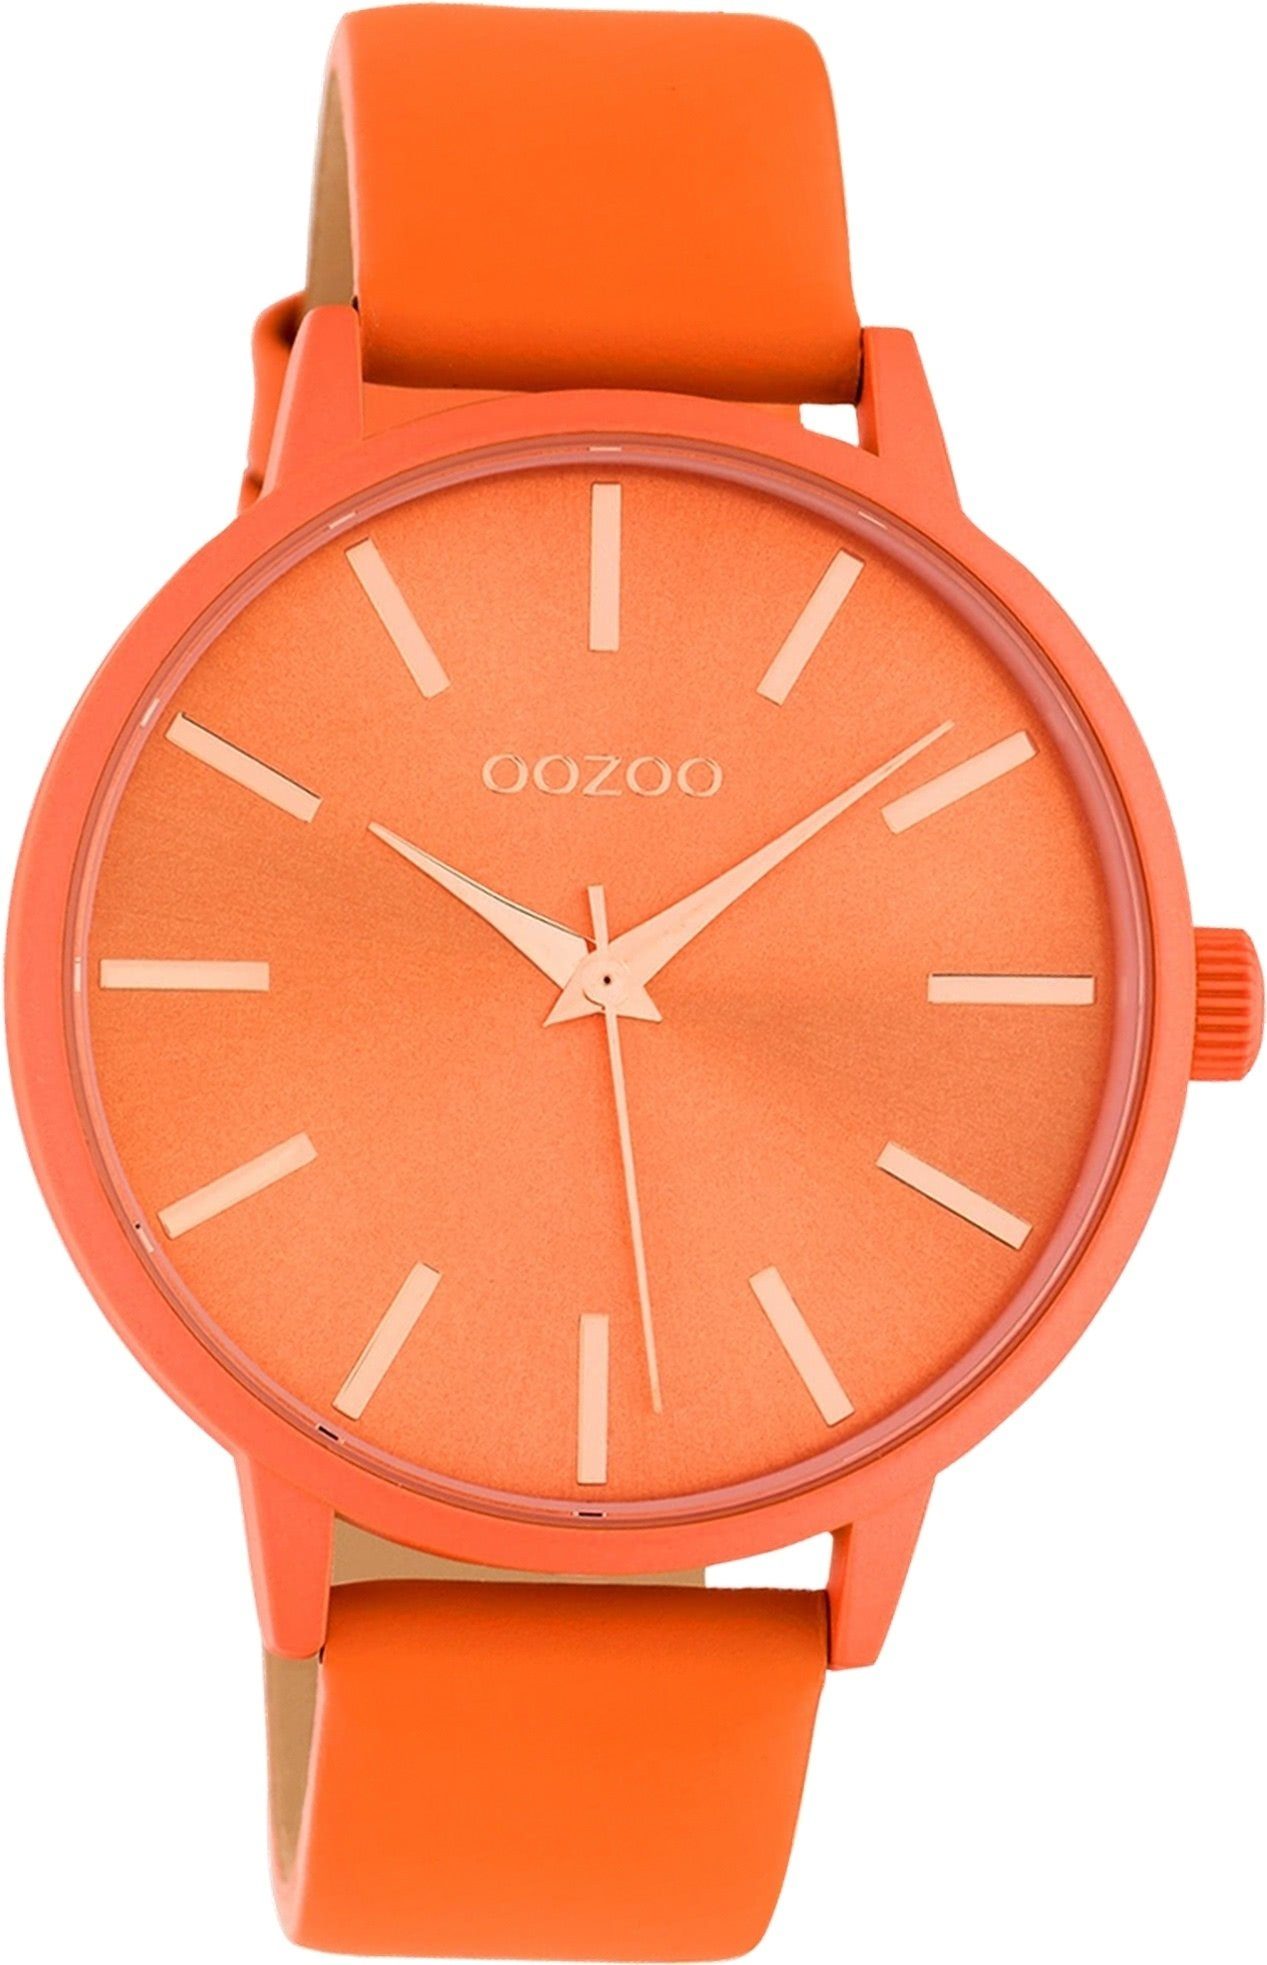 OOZOO Quarzuhr Oozoo Leder Damen Uhr C10614 Analog, Damenuhr Lederarmband orange, rundes Gehäuse, groß (ca. 42mm)